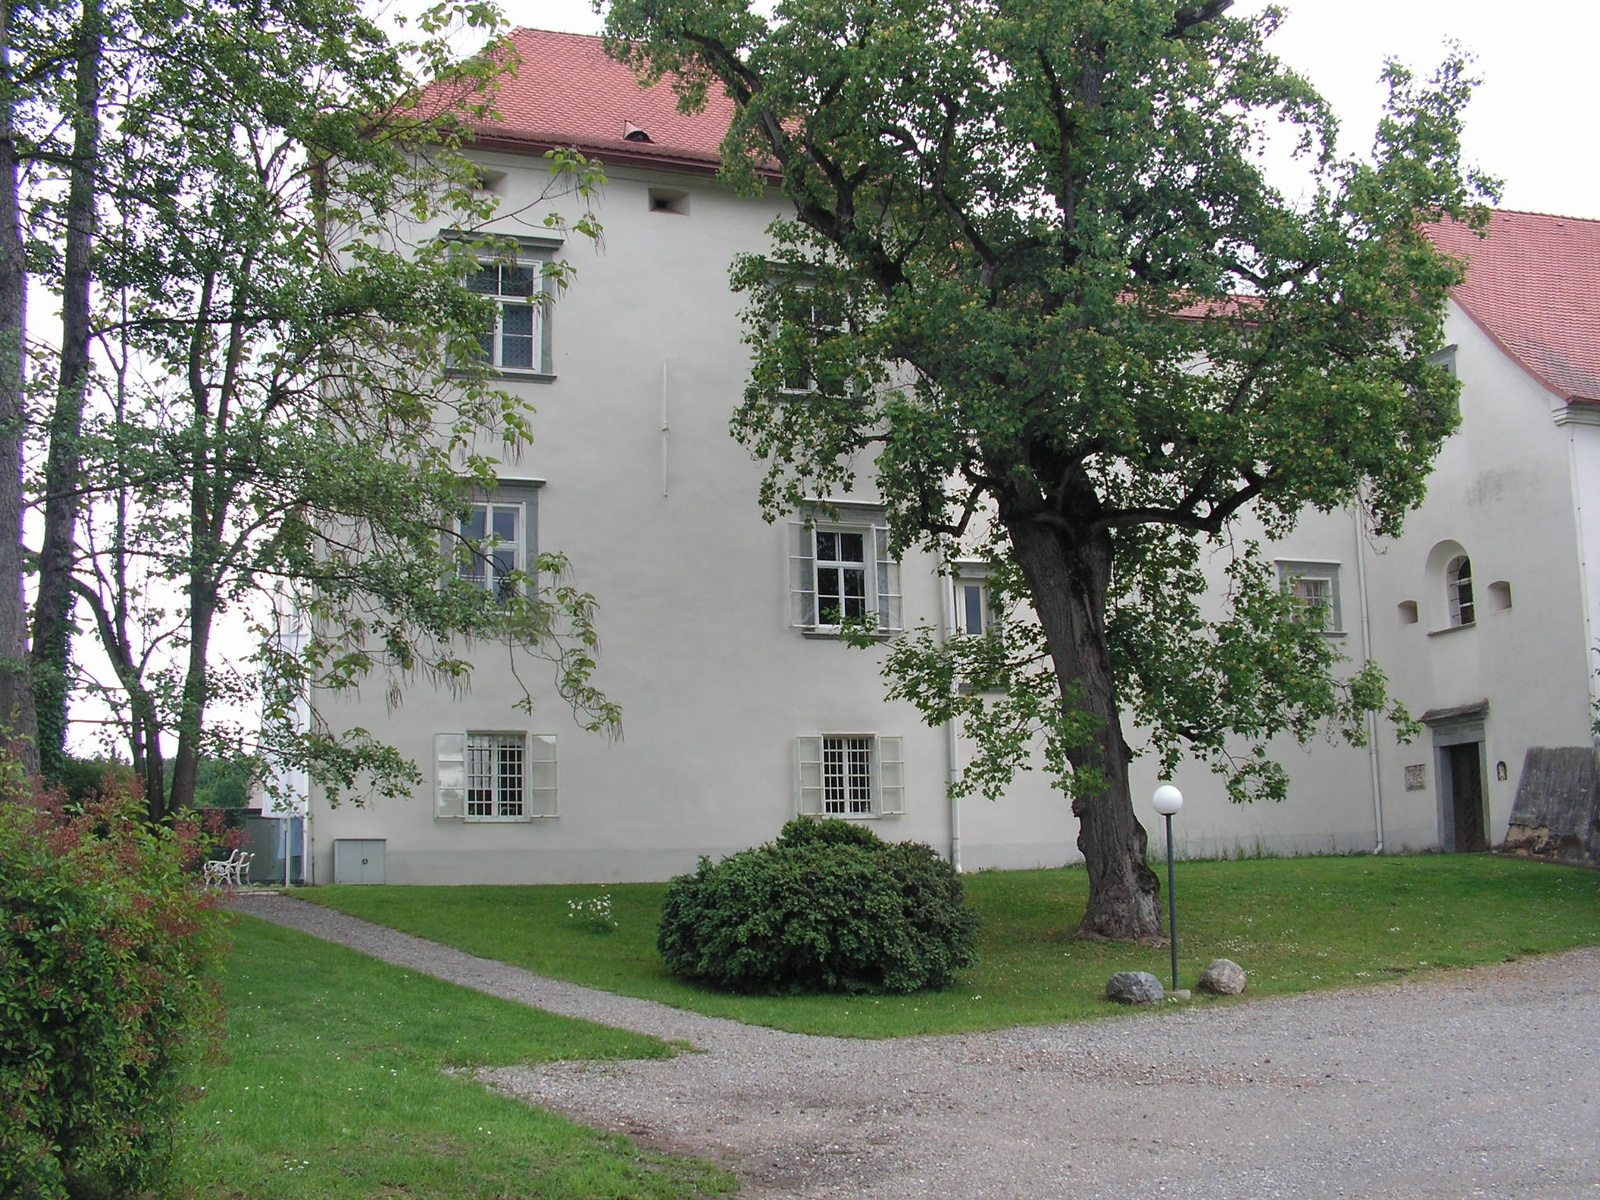 Stocking bei Wildon/Neudorf, Schloß Neudorf, SzG3